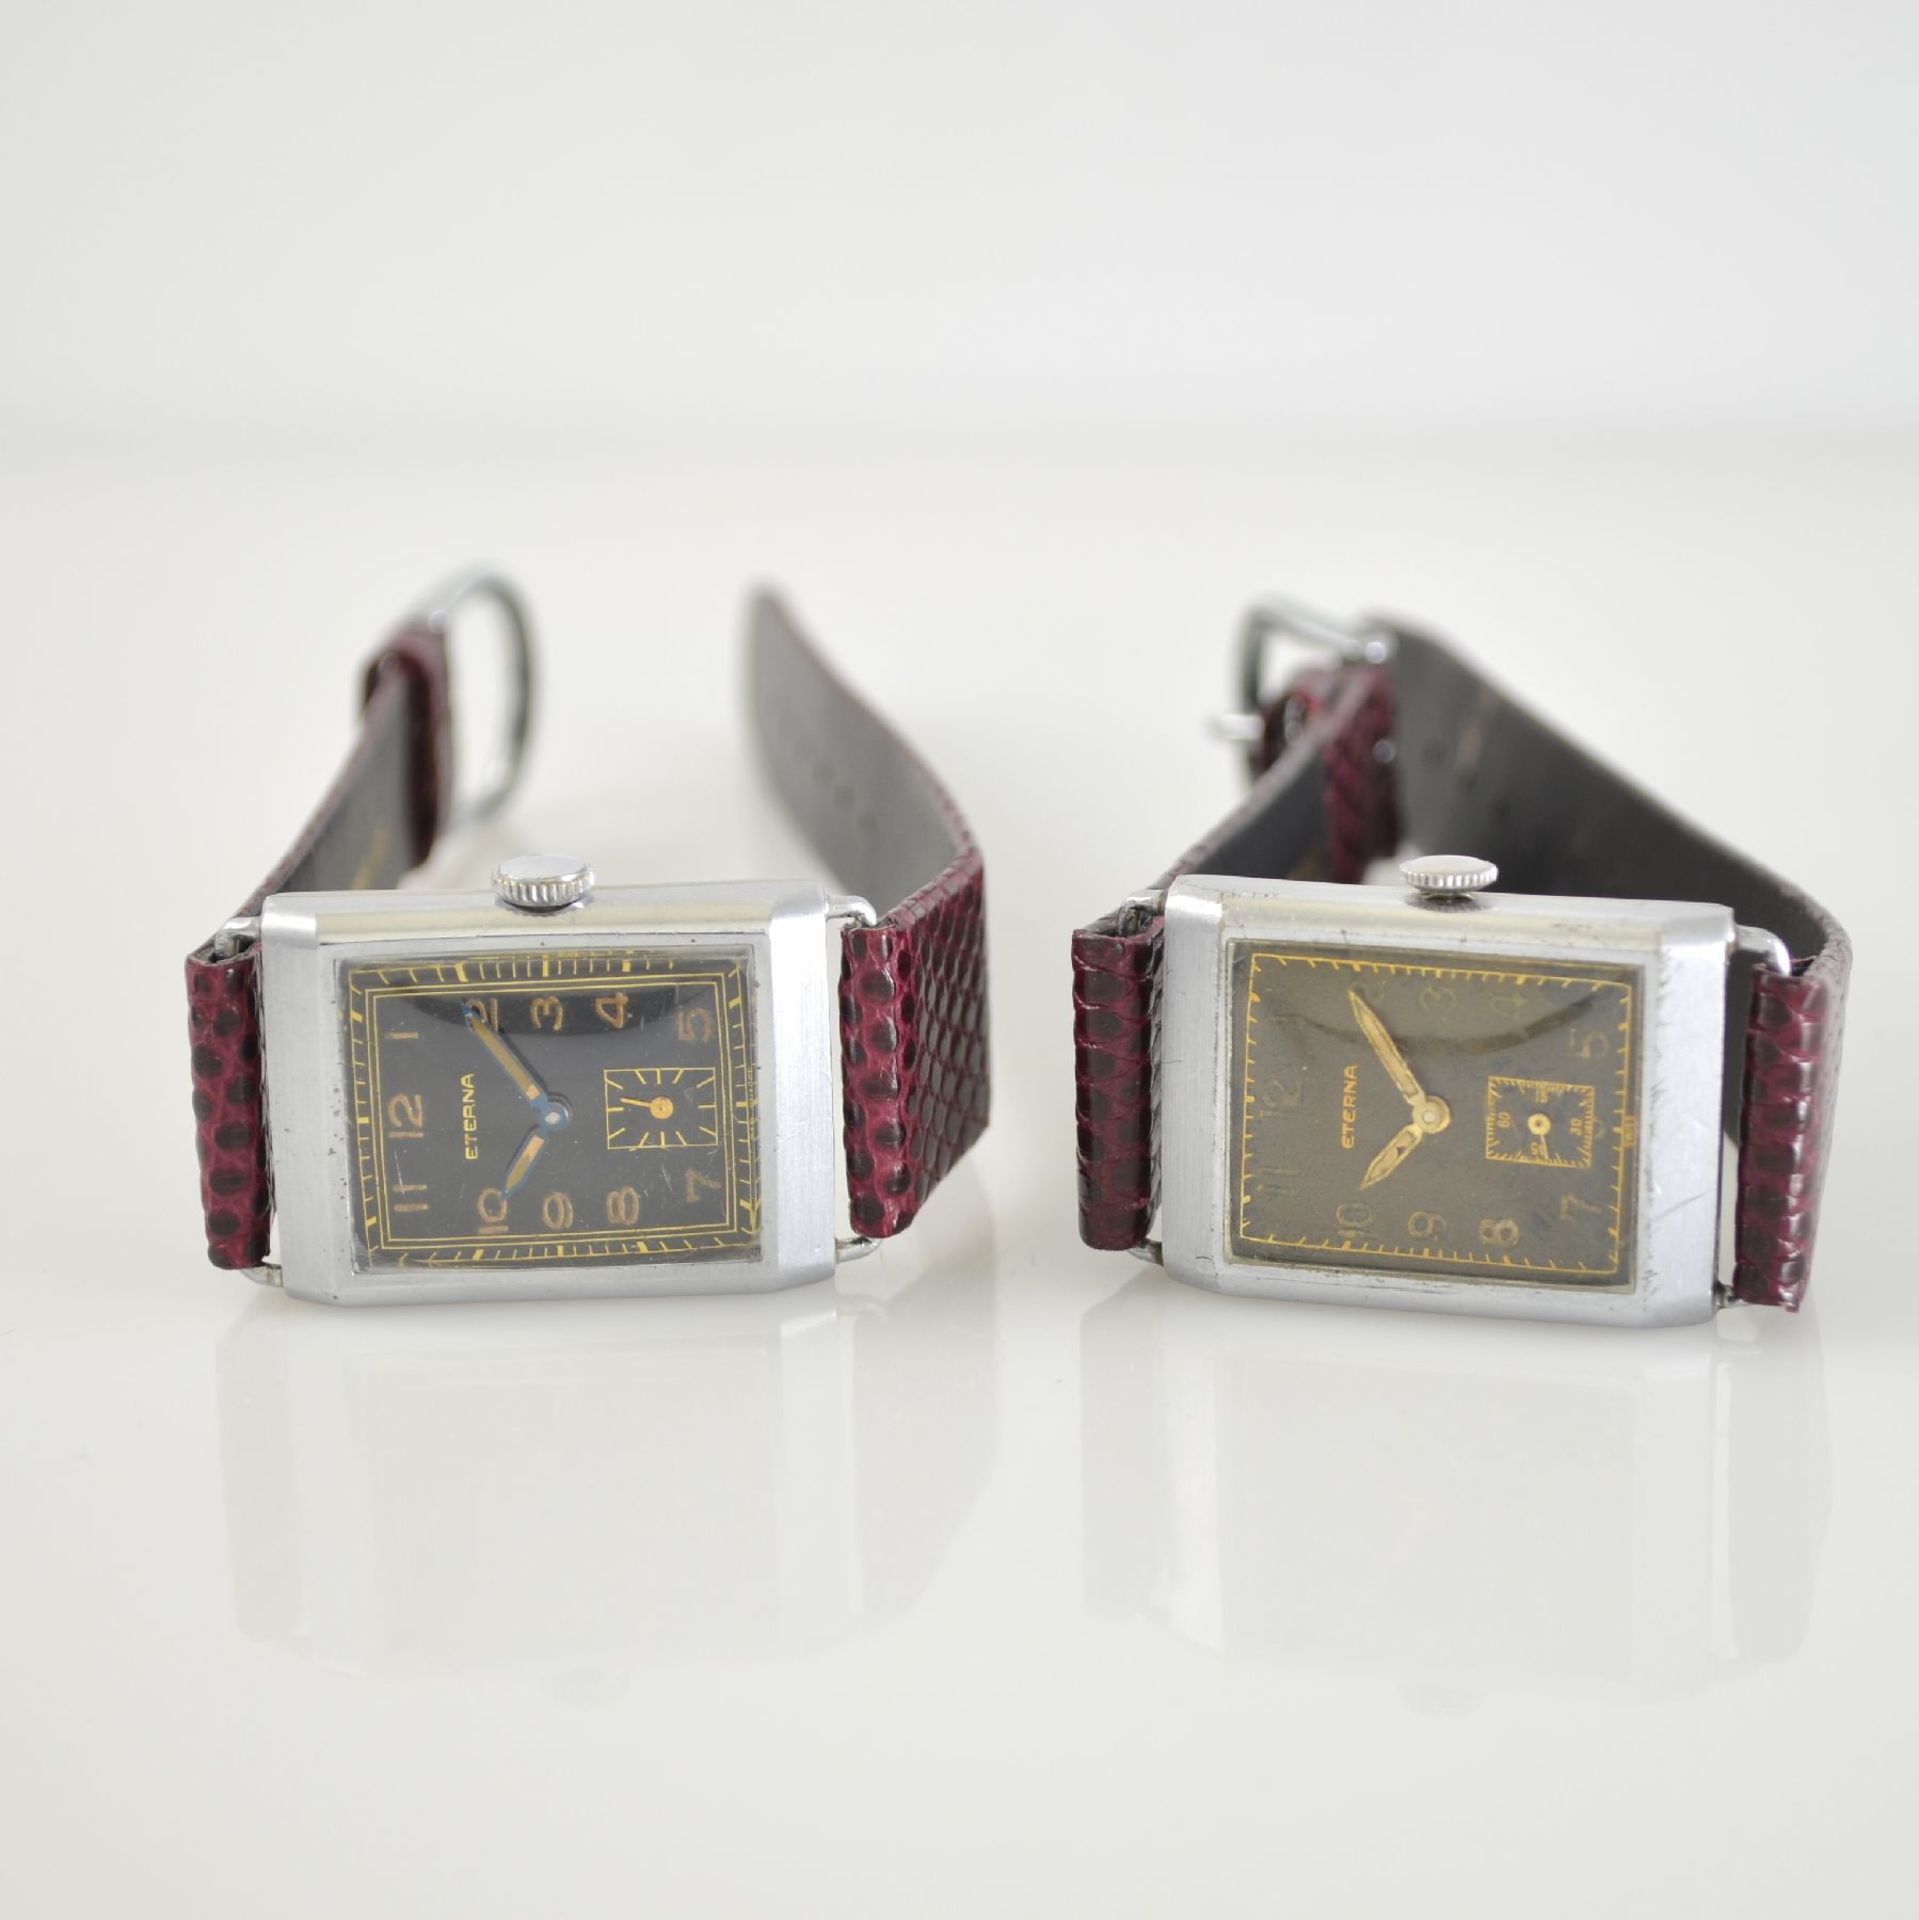 ETERNA 4 rectangular wristwatches in chrome plated cases, Switzerland around 1930, manual winding,